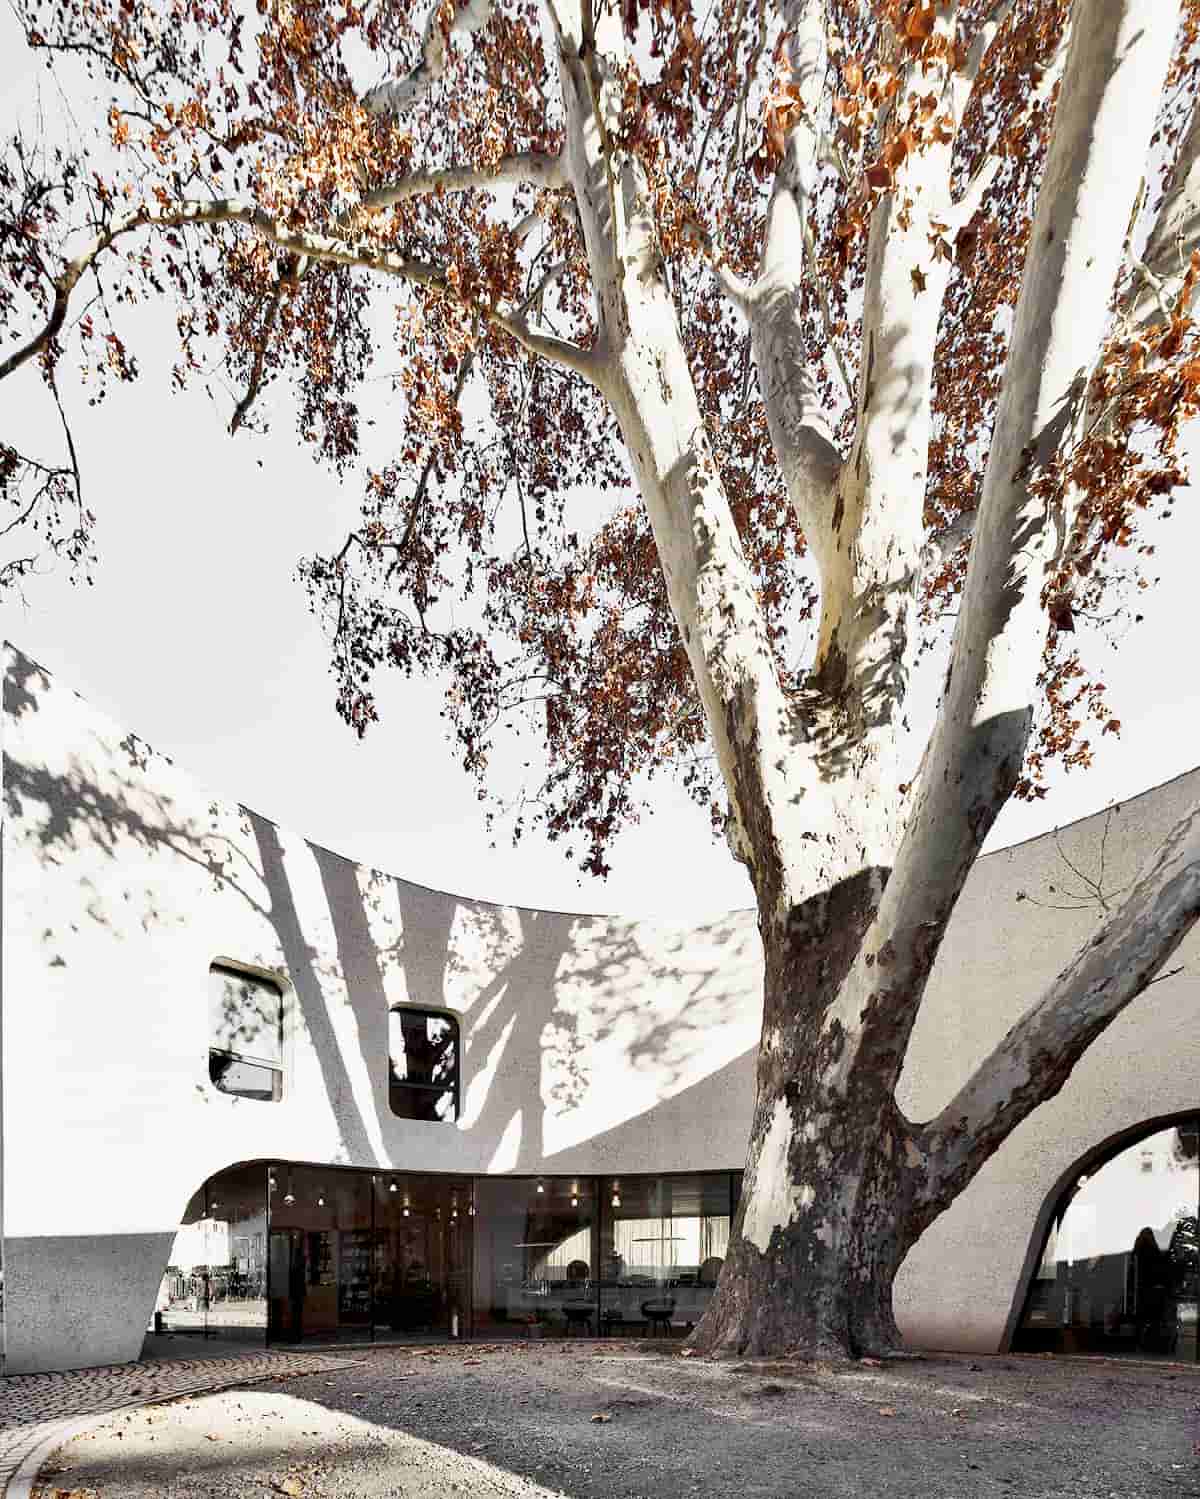 TreeHugger impressive building with levitating above the ground of the lightness its brutalist sensibility